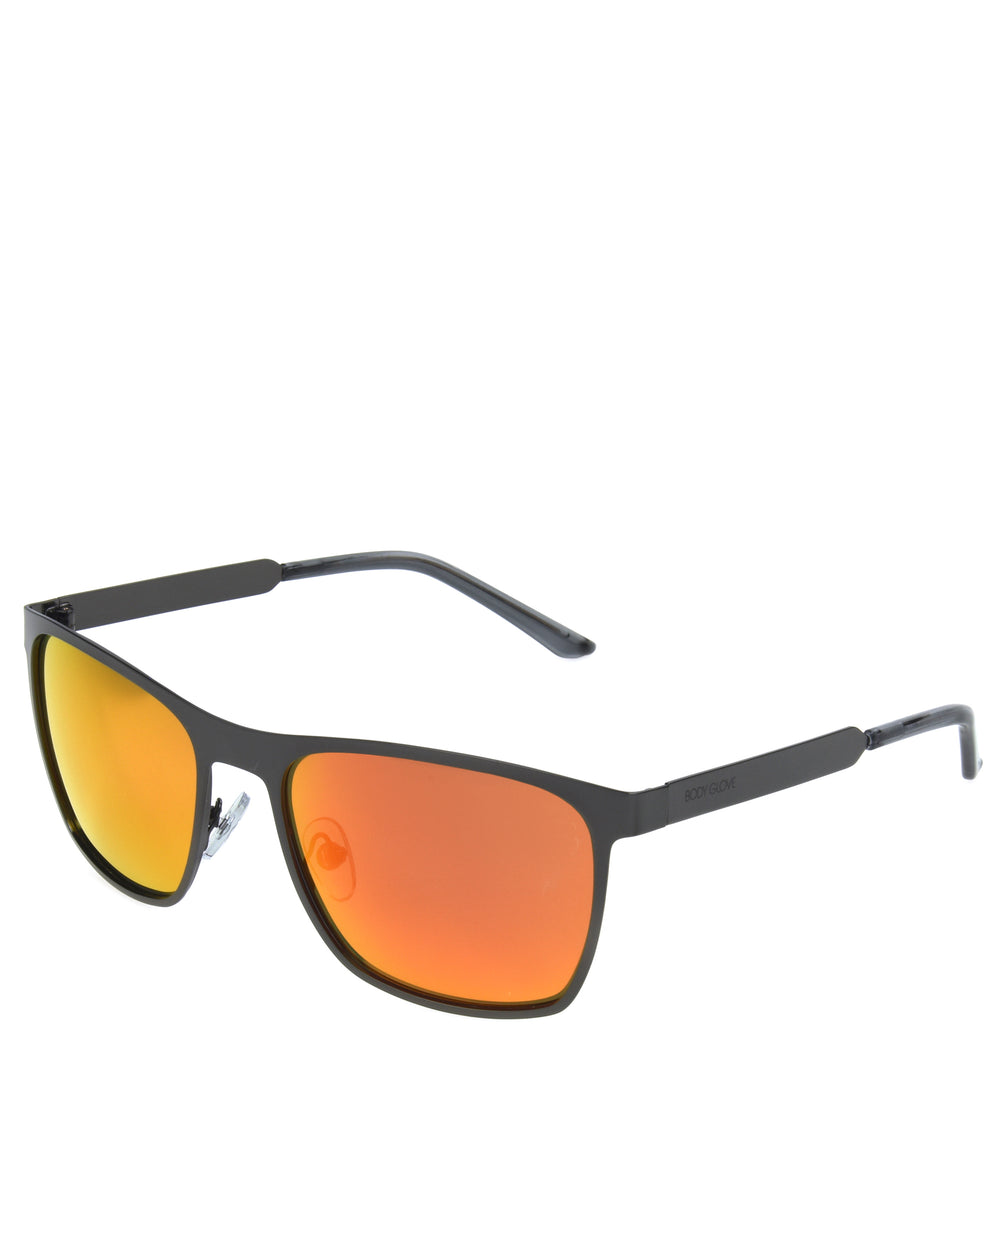 Men's BGM1906 Polarized Sunglasses - Gun Metal